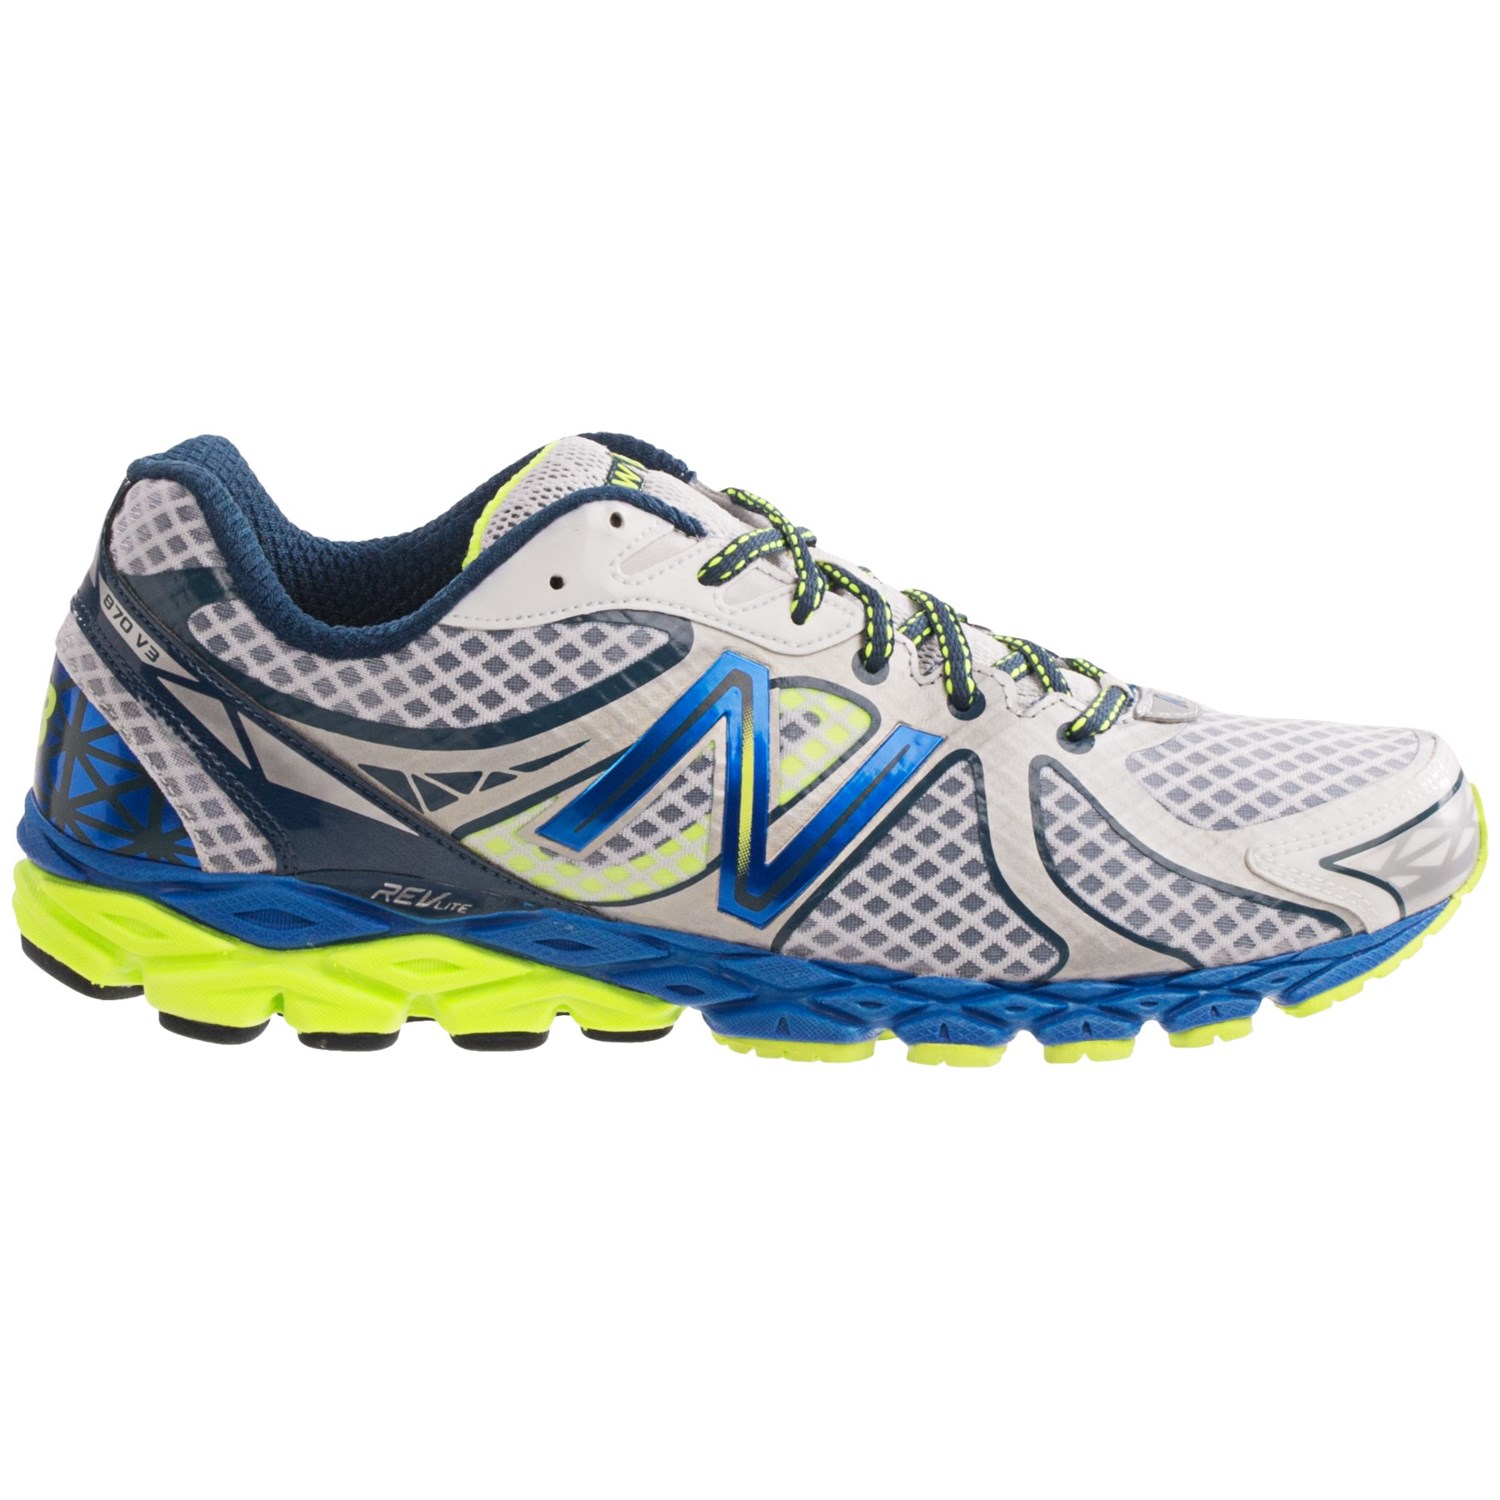 New Balance 870V3 Running Shoes (For Men) 7522D - Save 45%